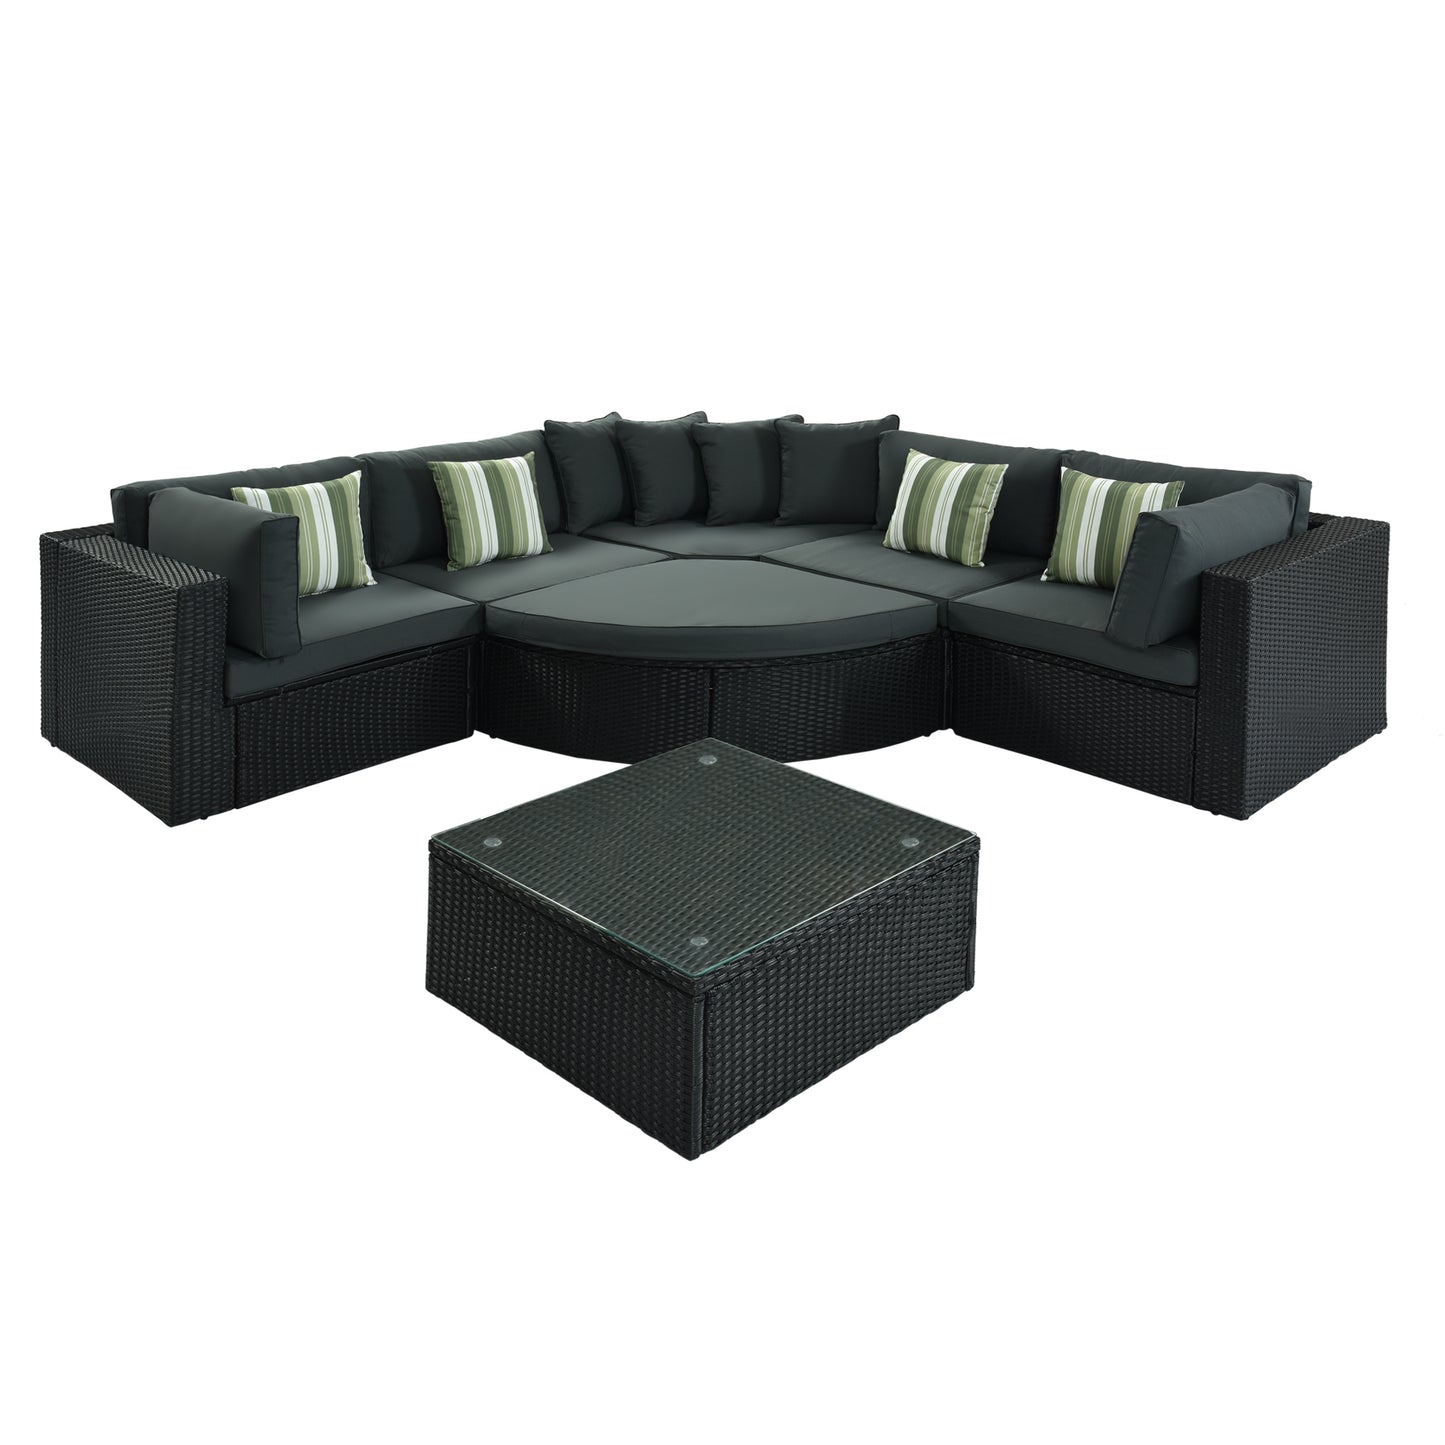 7-piece Outdoor Wicker Sofa Set, Rattan Sofa Lounger, With Striped Green Pillows, Conversation Sofa, For Patio, Garden, Deck, Black Wicker, Gray Cushion